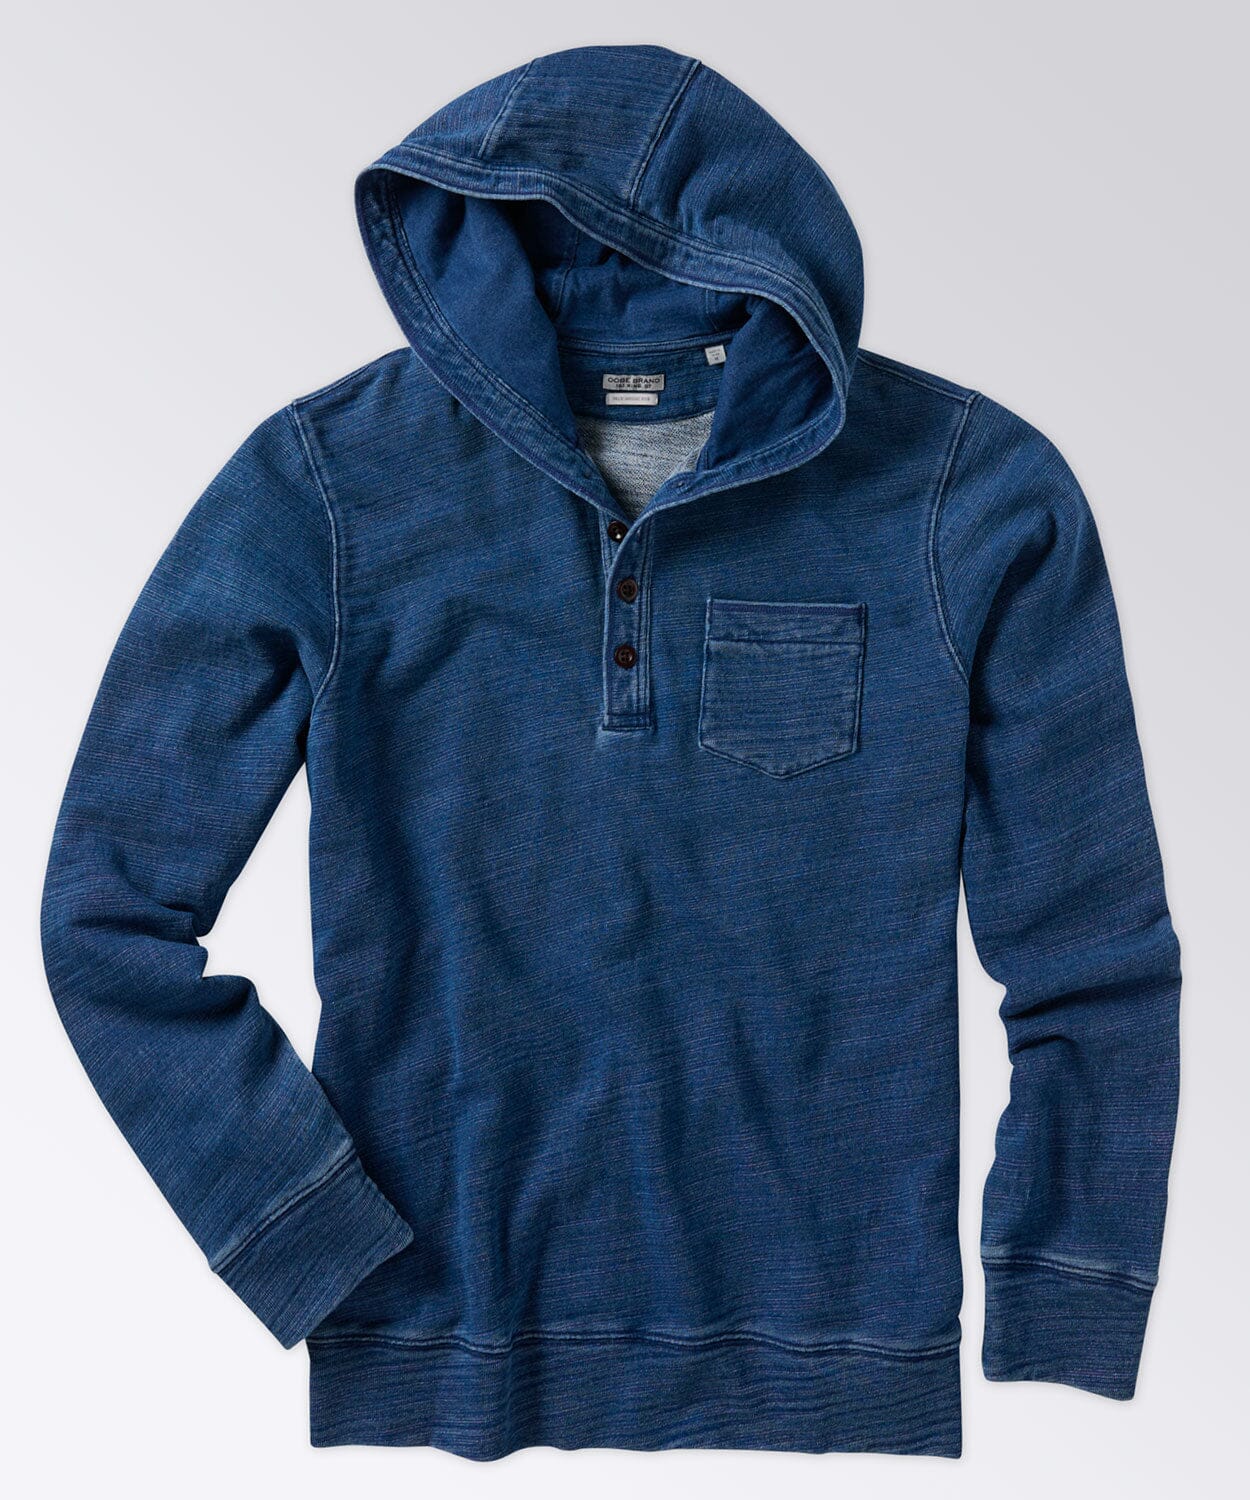 Indigo Blue Collection by Premium Menswear OOBE | BRAND